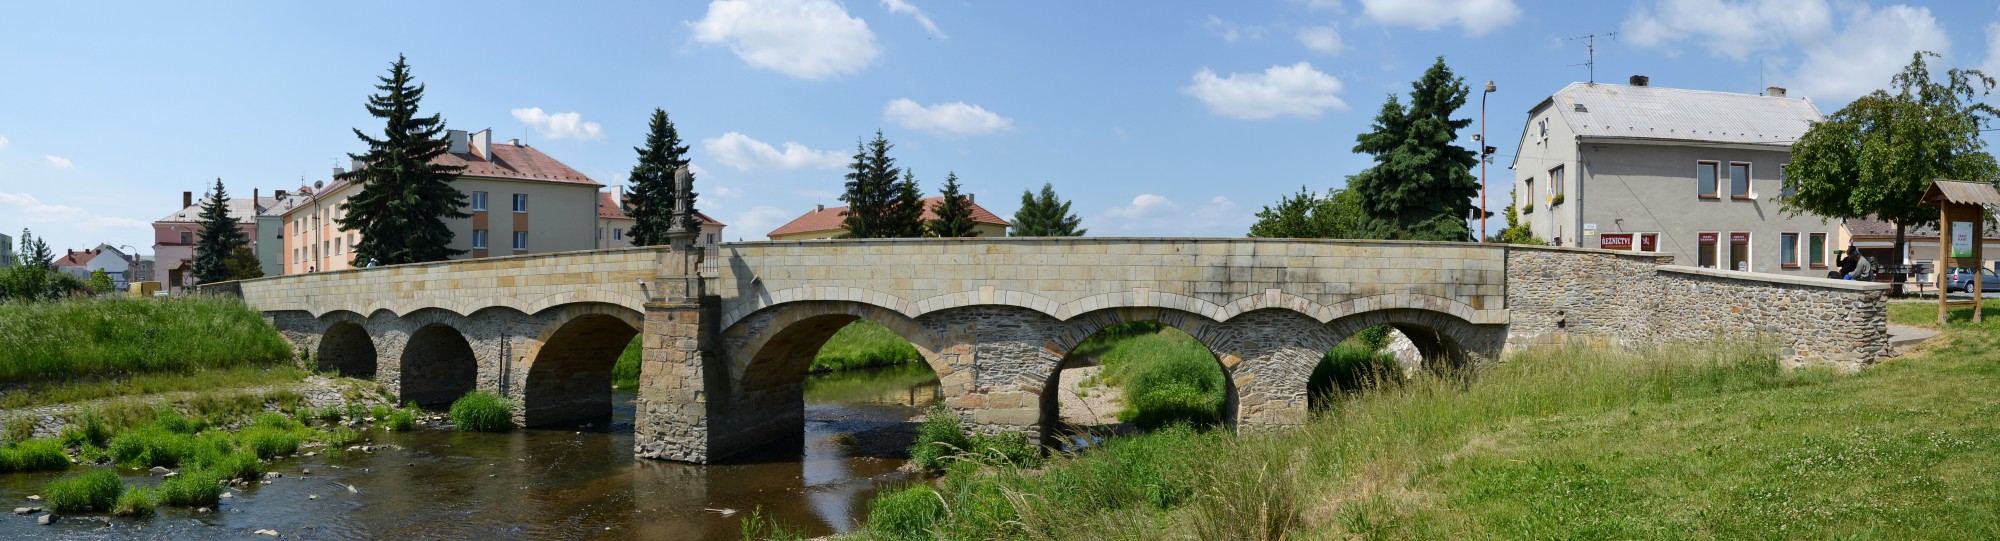 Litovel (Littau) - Svatojánský most - pano